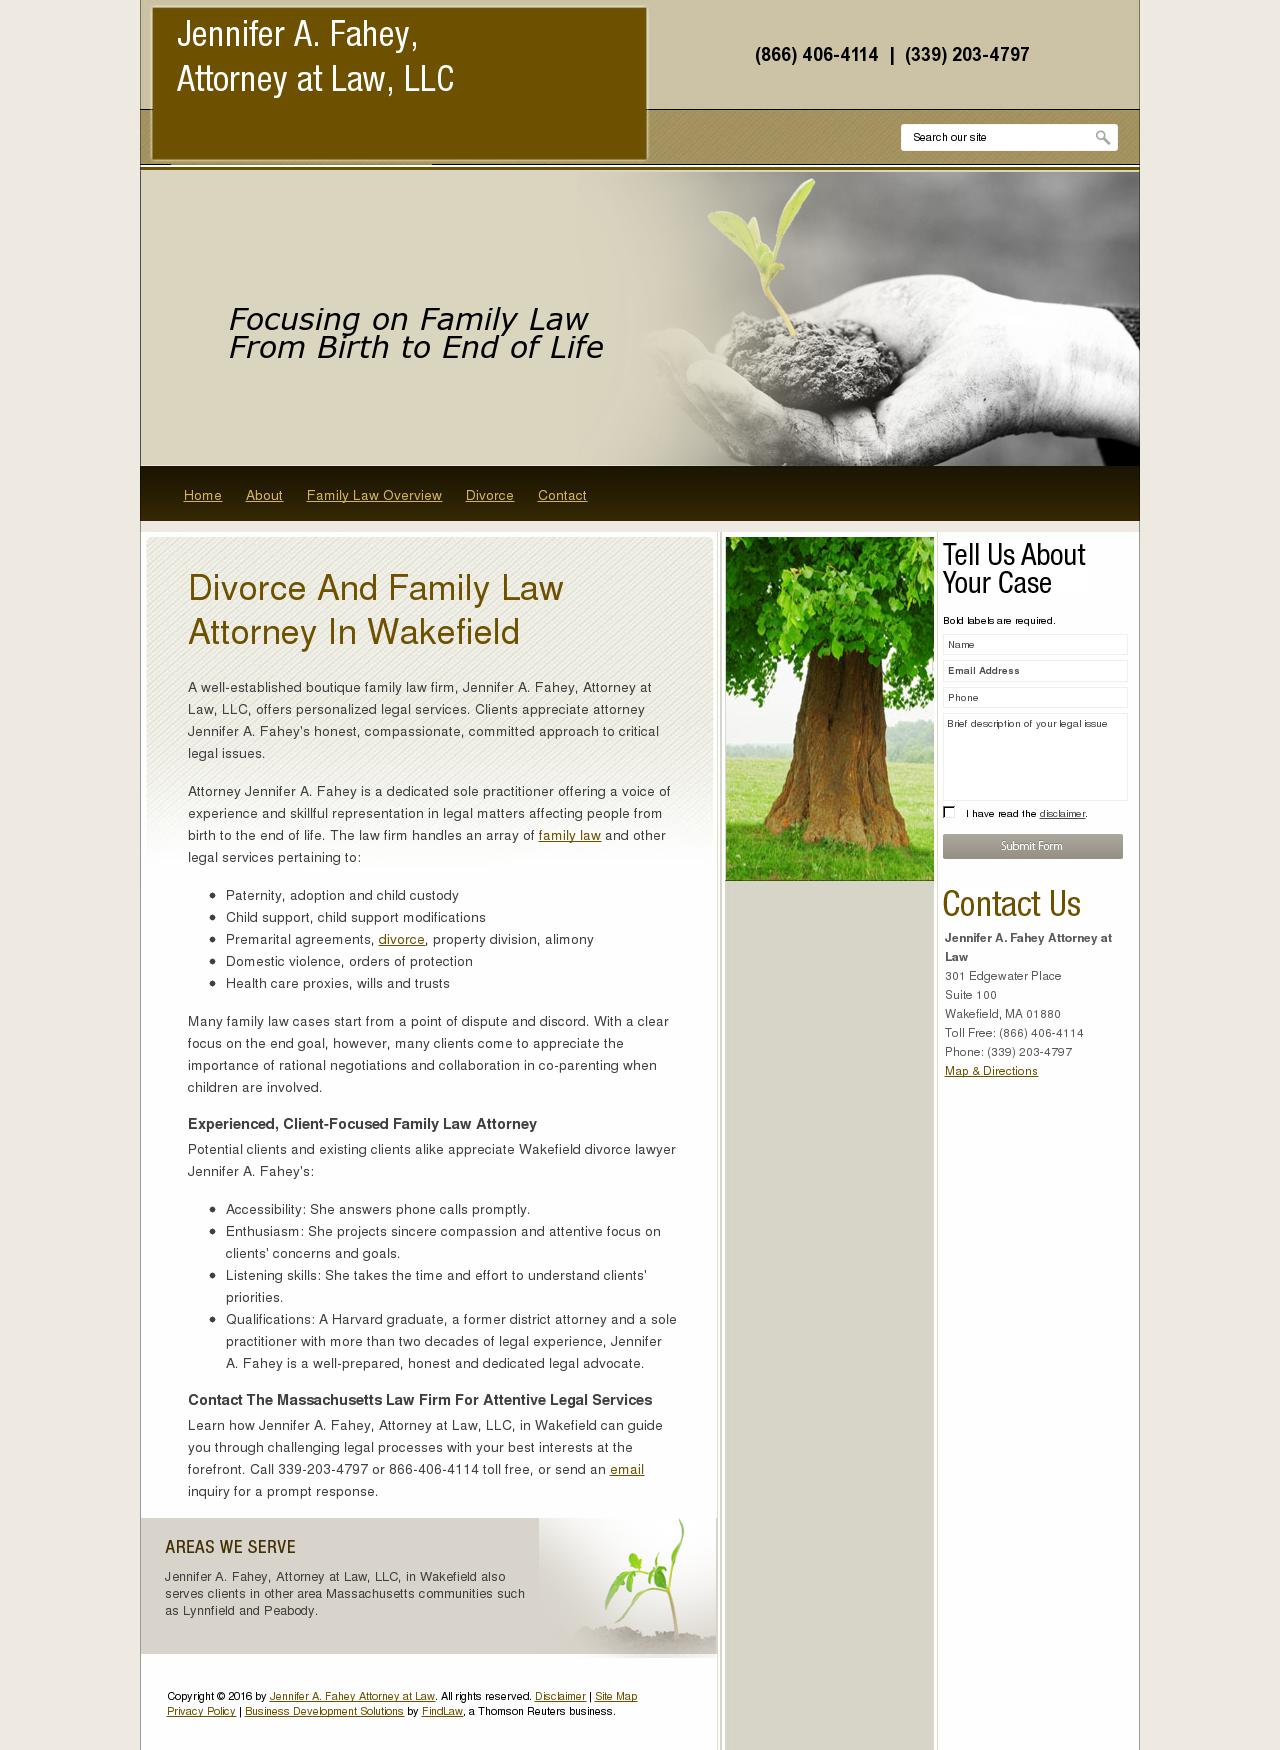 Jennifer A. Fahey Attorney at Law - Wakefield MA Lawyers